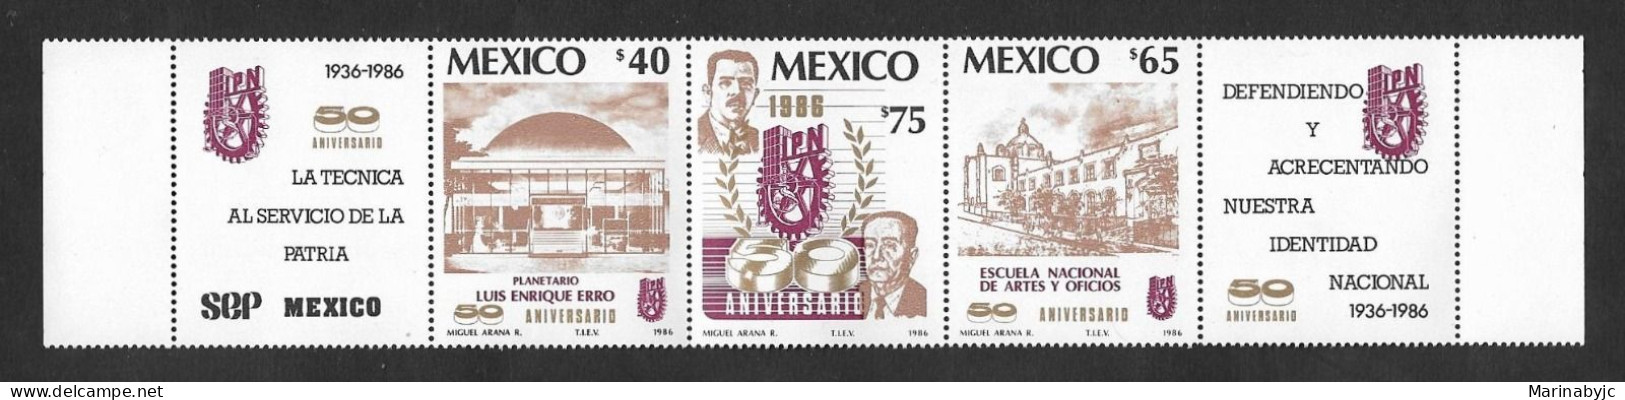 SD)1986 MEXICO 50TH ANNIVERSARY OF TECHNIQUE AT THE SERVICE OF THE COUNTRY, LUIS E. ERRO PLANETARIUM 40P SCT 1431, EMBLE - Mexico